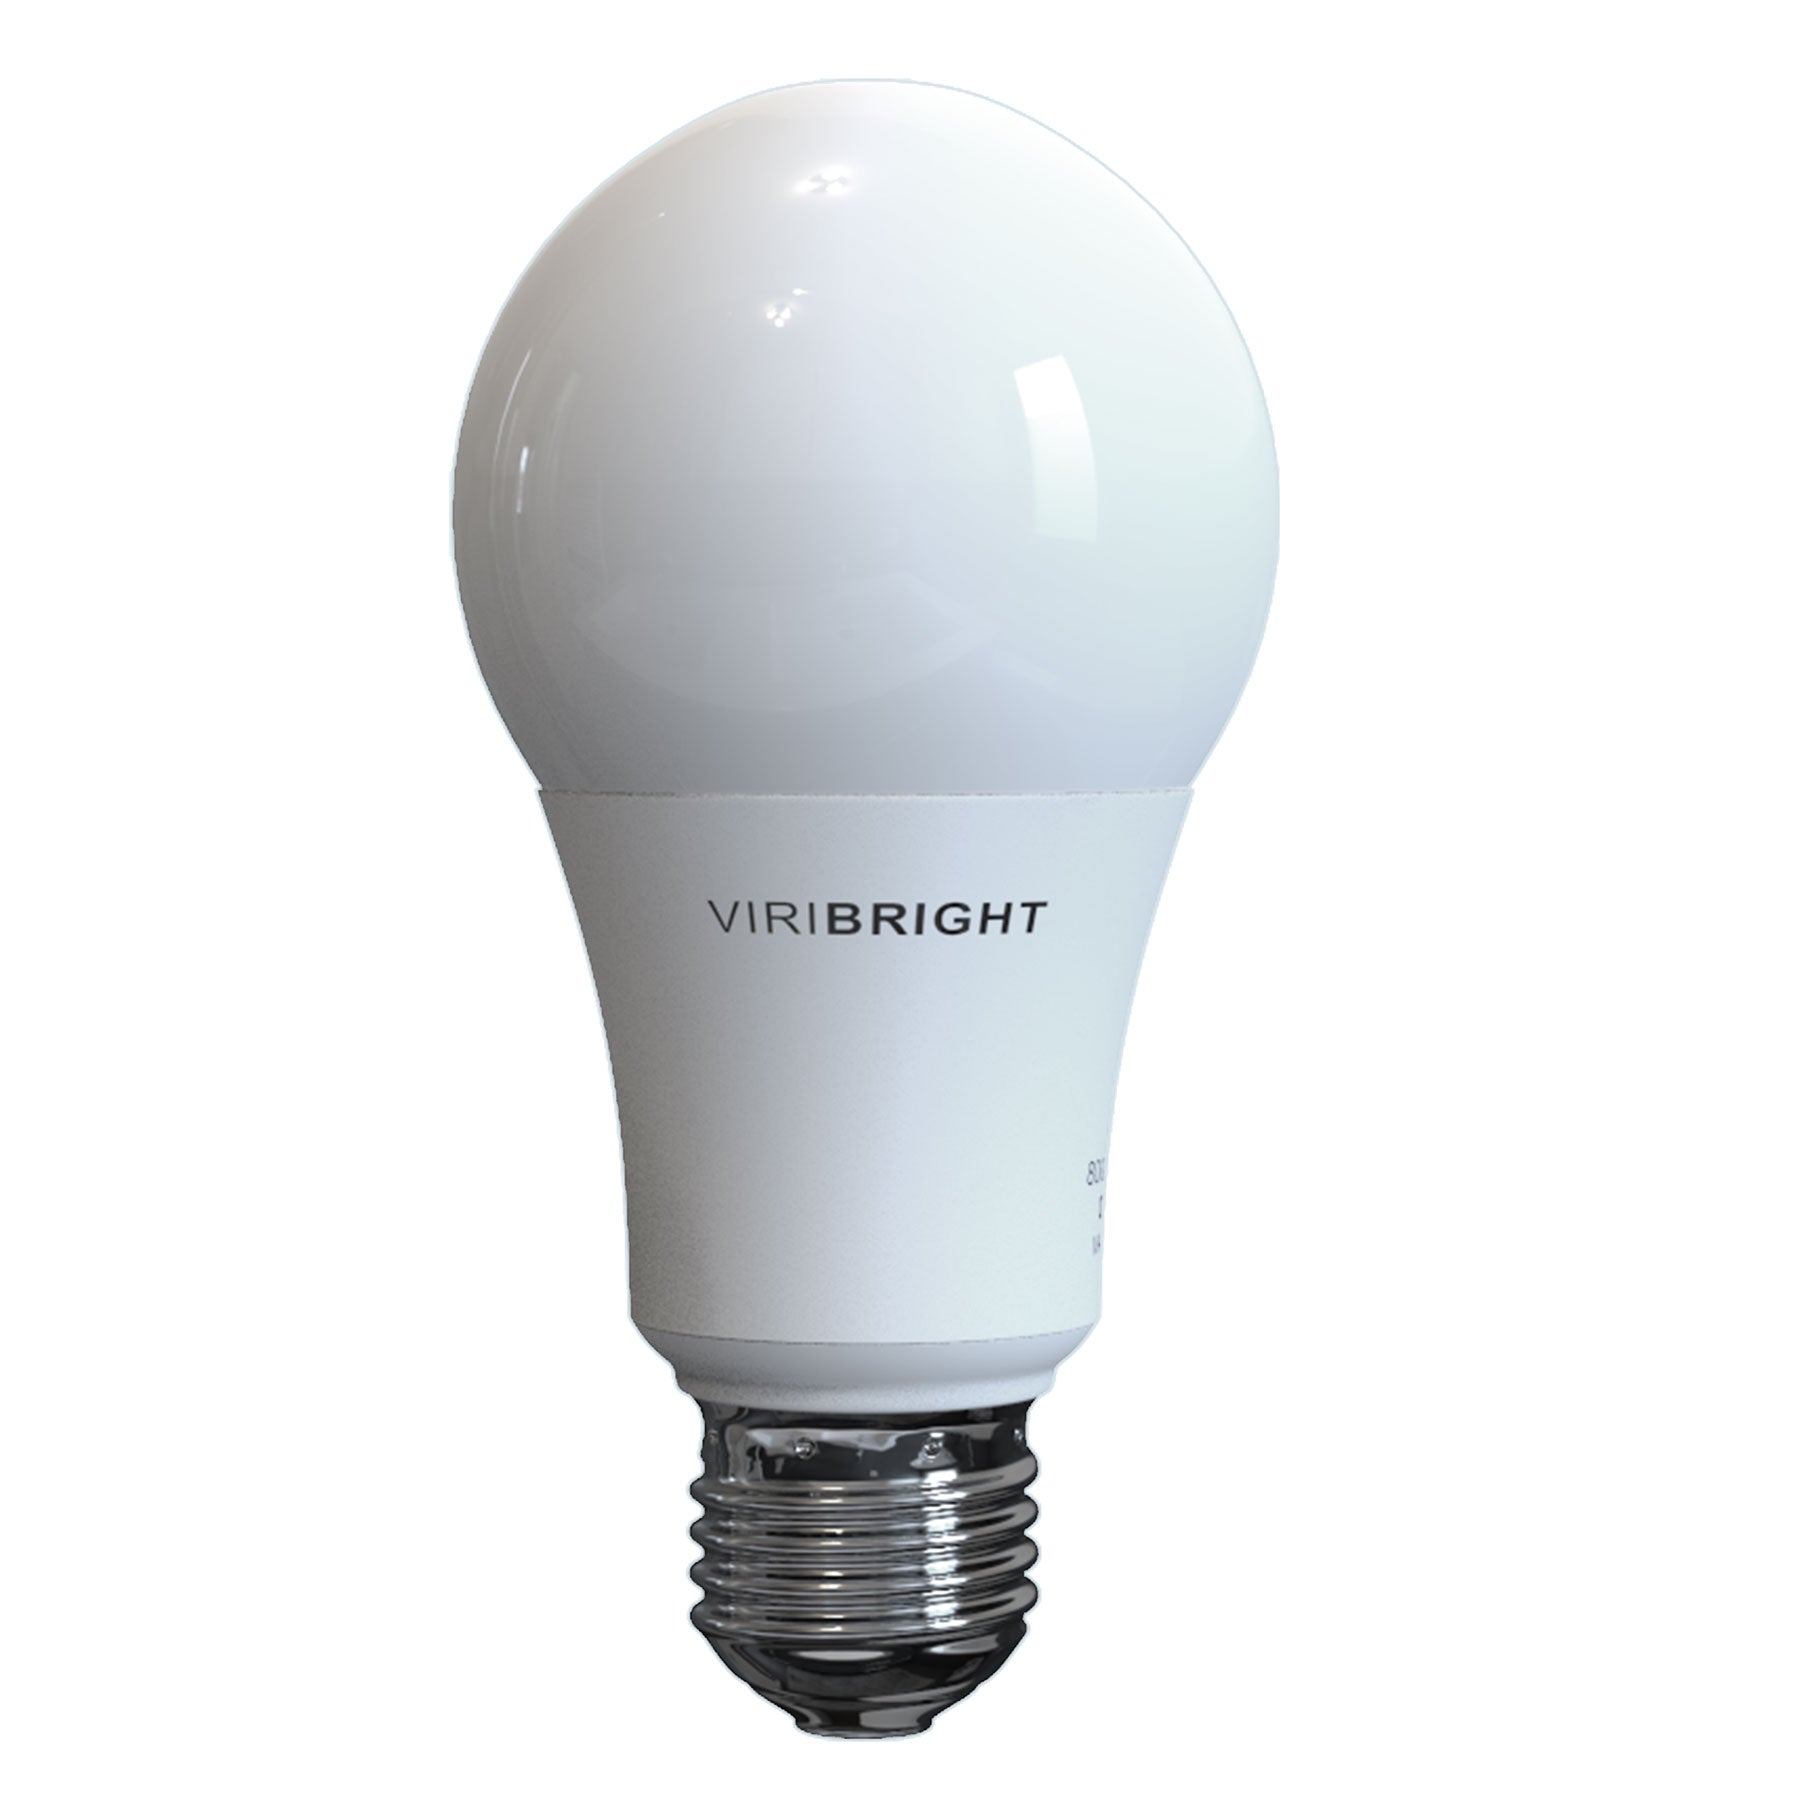 Energy-saving LED light bulb